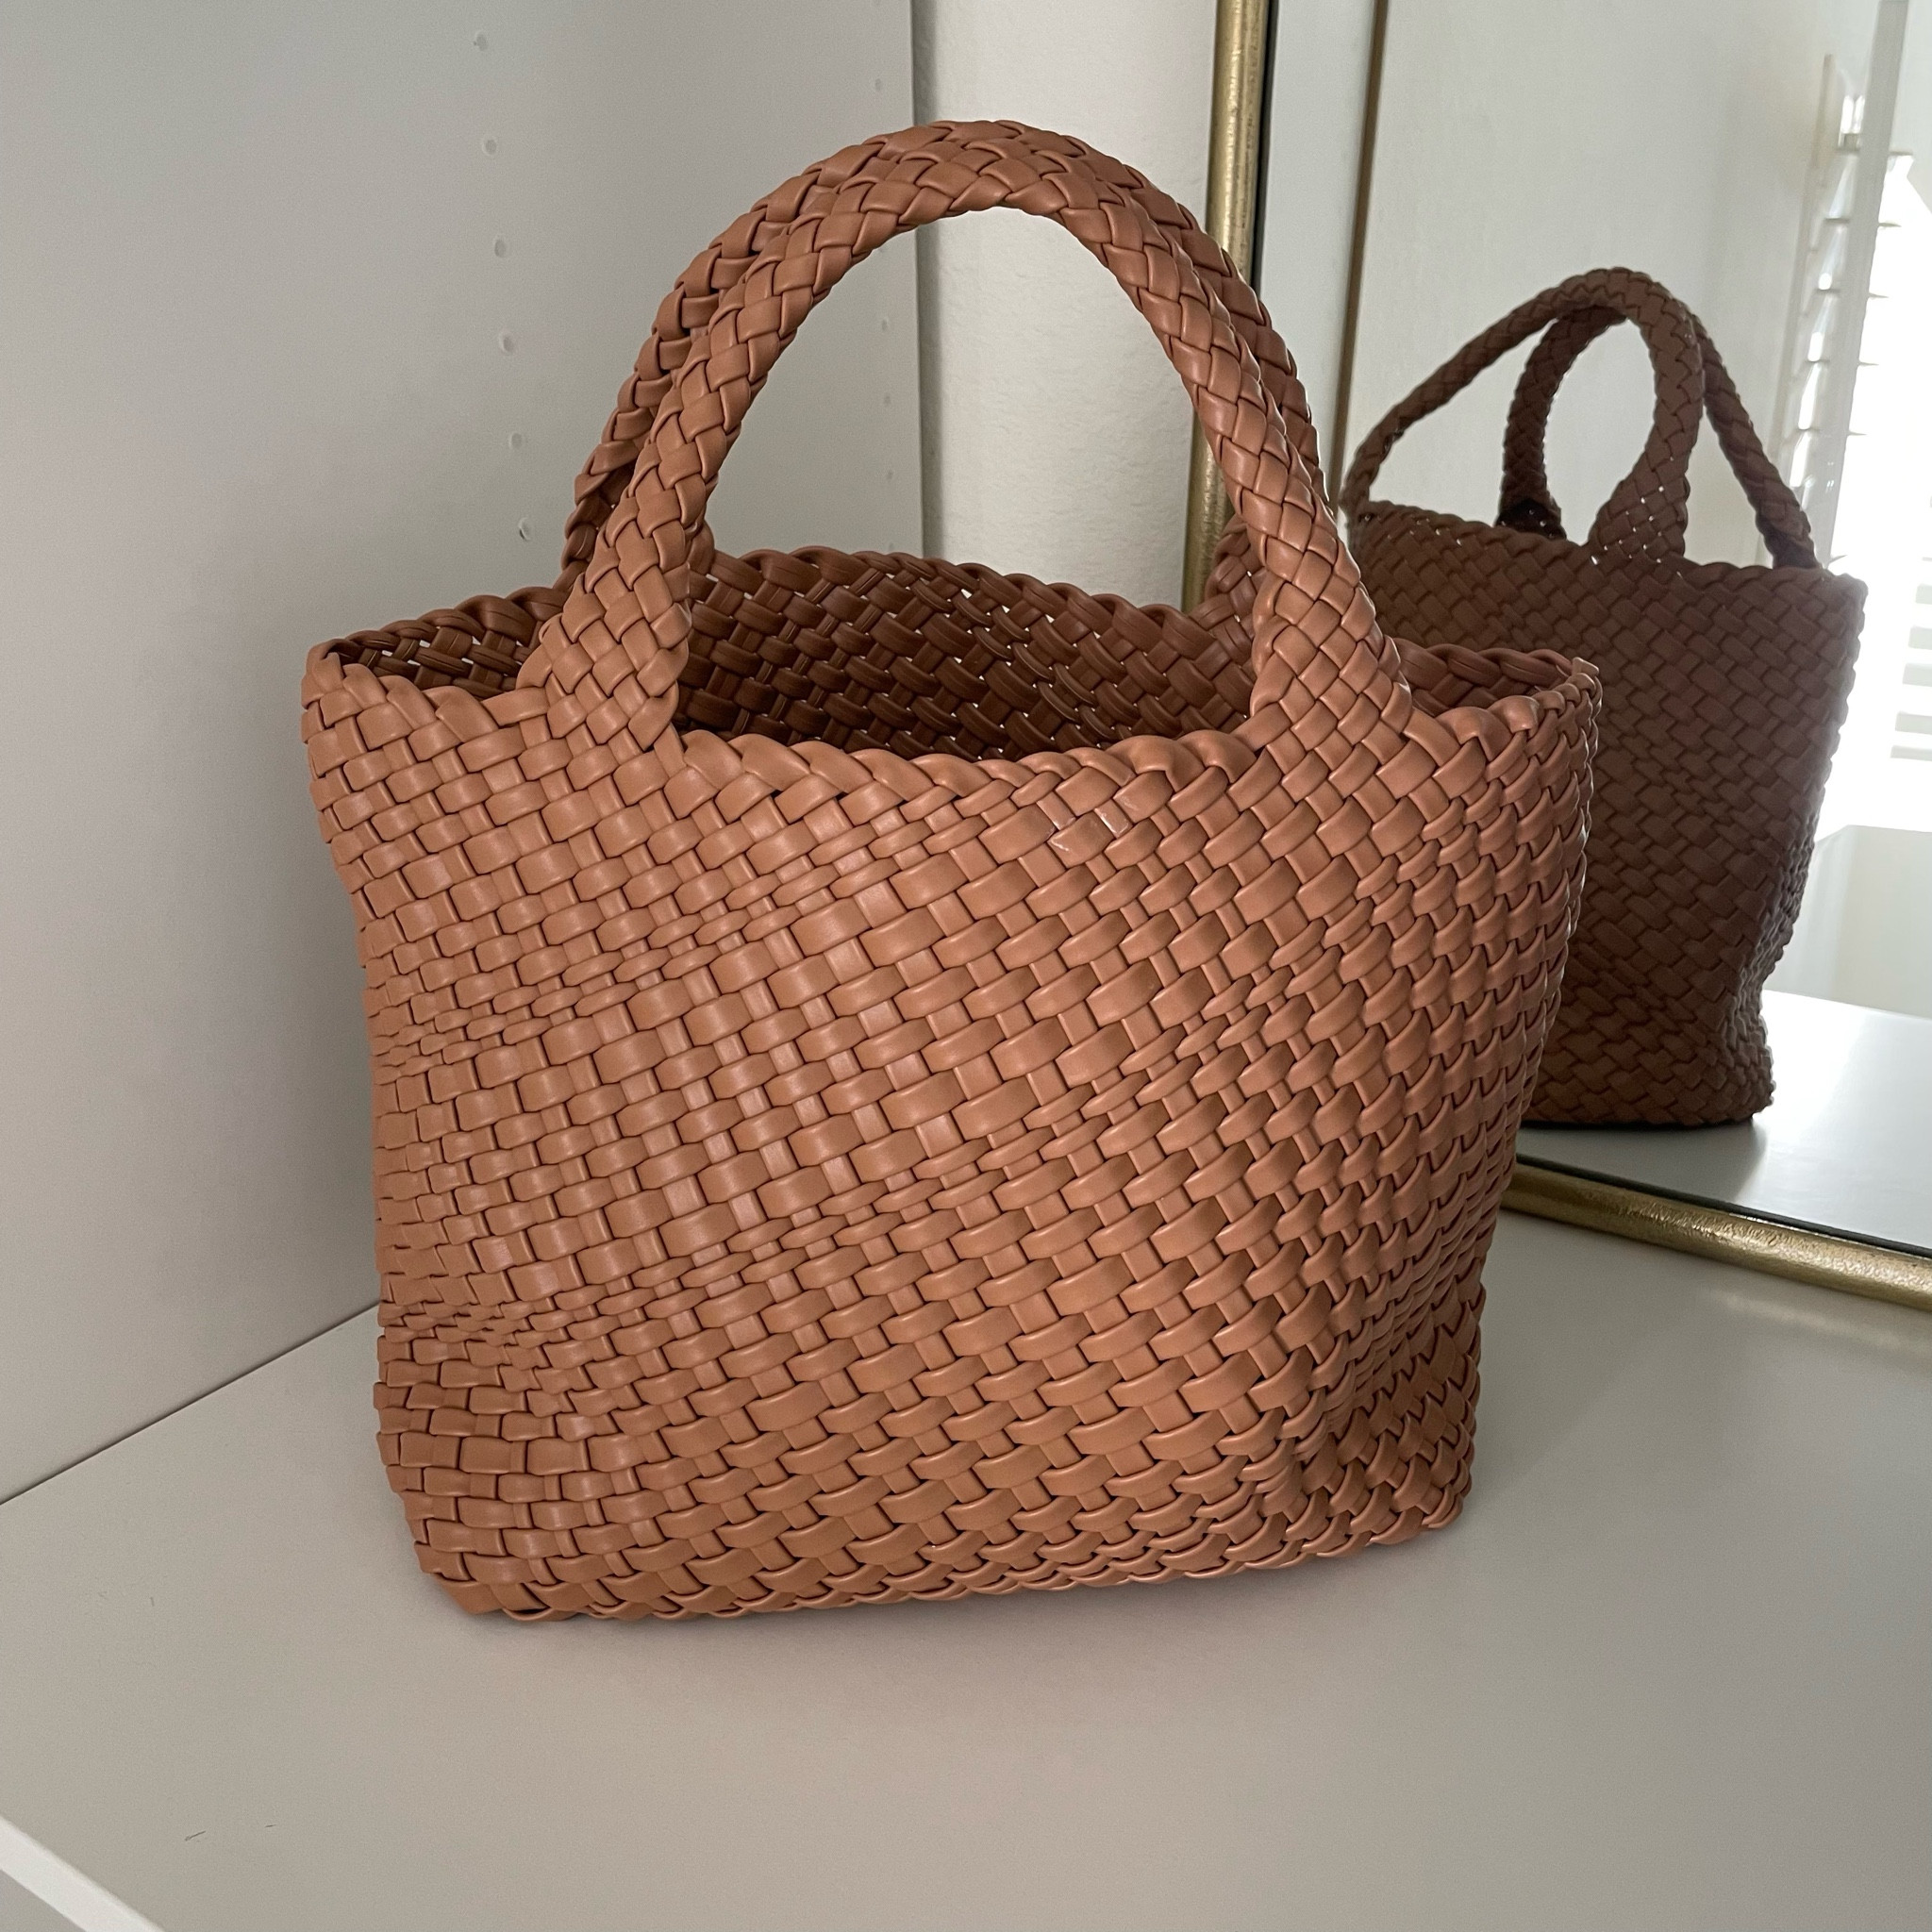 KALIDI Woven Tote Bag, Women Macaron Soft Leather Weave Handbag Purse Wrist Bag Large Capacity Work Shopping Travel Daily